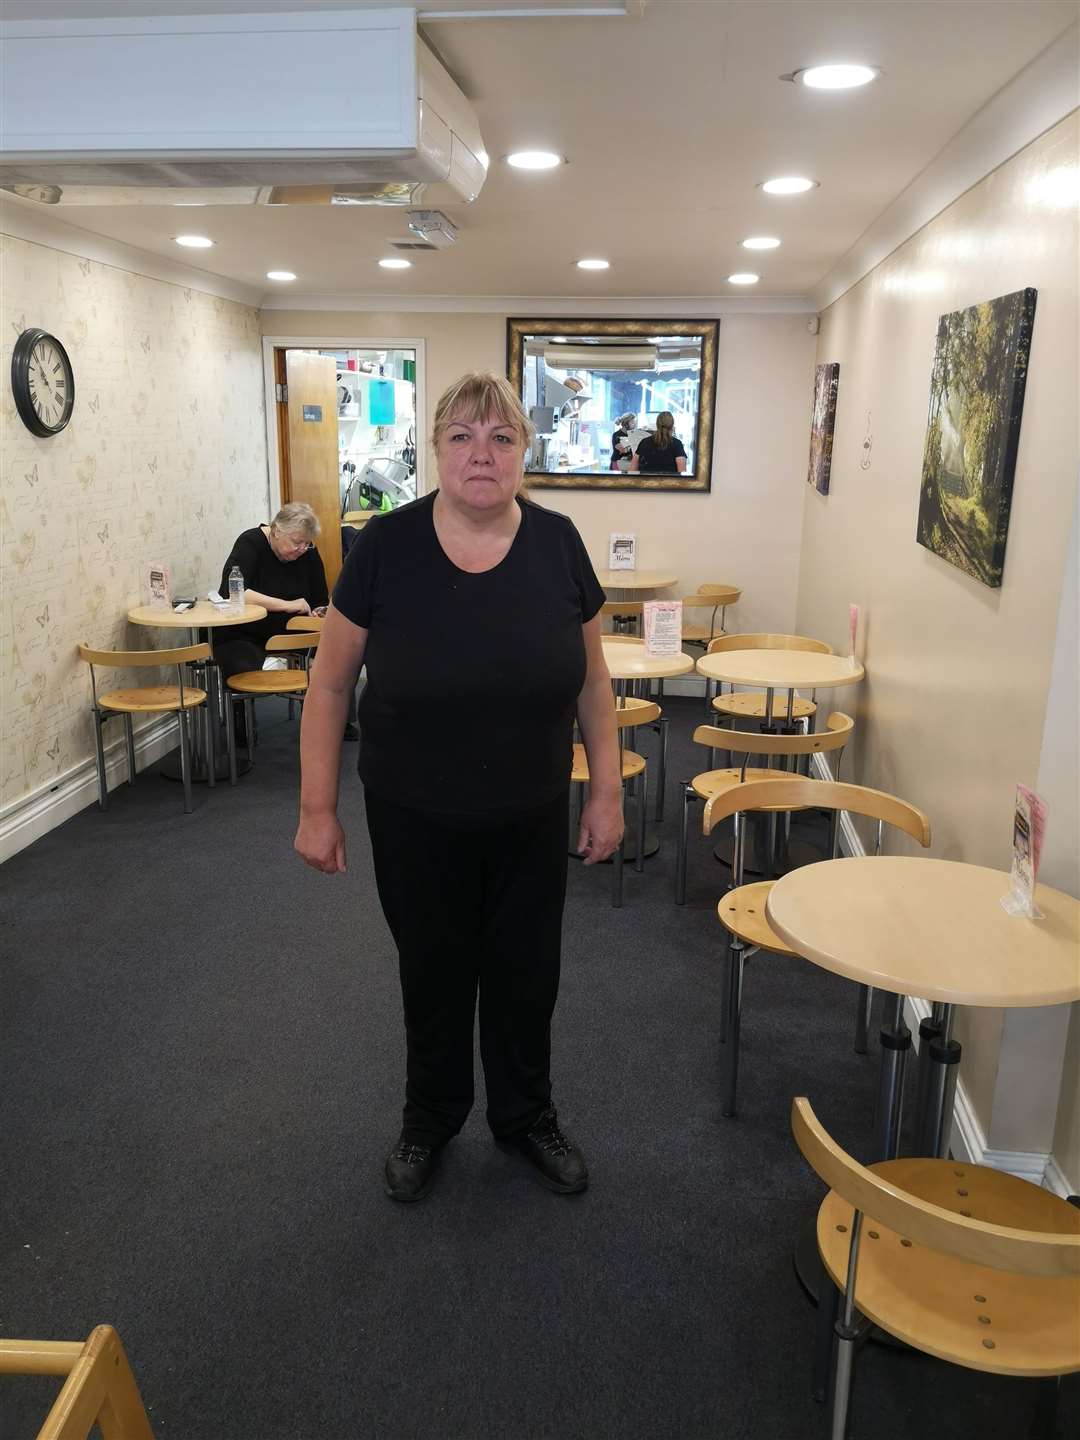 Debbie Hellier runs the Crumbs cafe in King Street